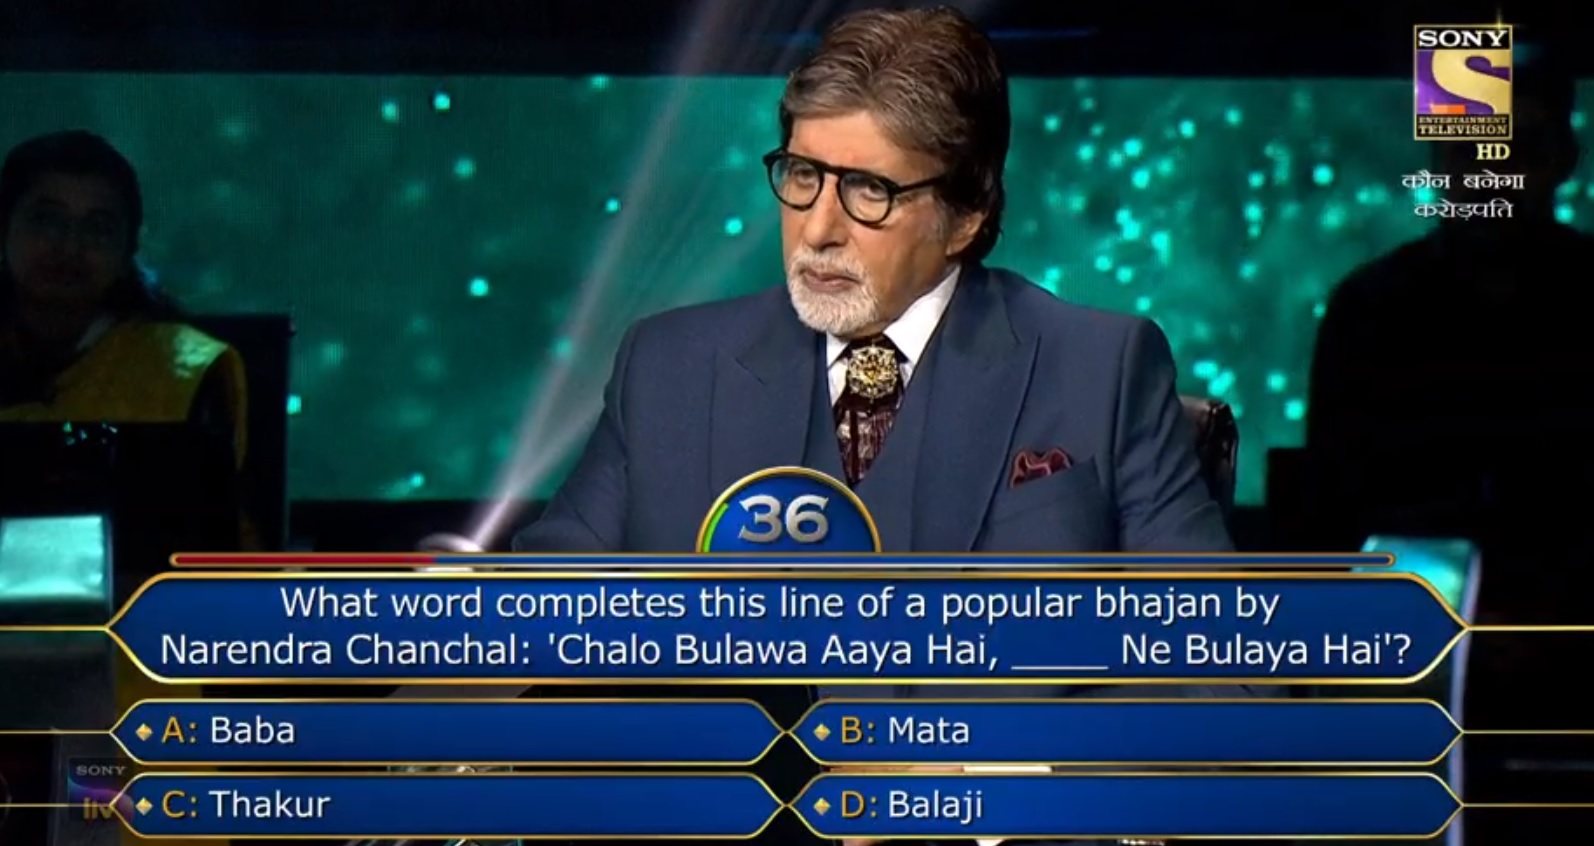 Ques : What word completes this line of a popular bhajan by Narendra Chanchal: ‘Chalo Bulawa Aaya Hai, ______ Ne Bulaya Hai’?